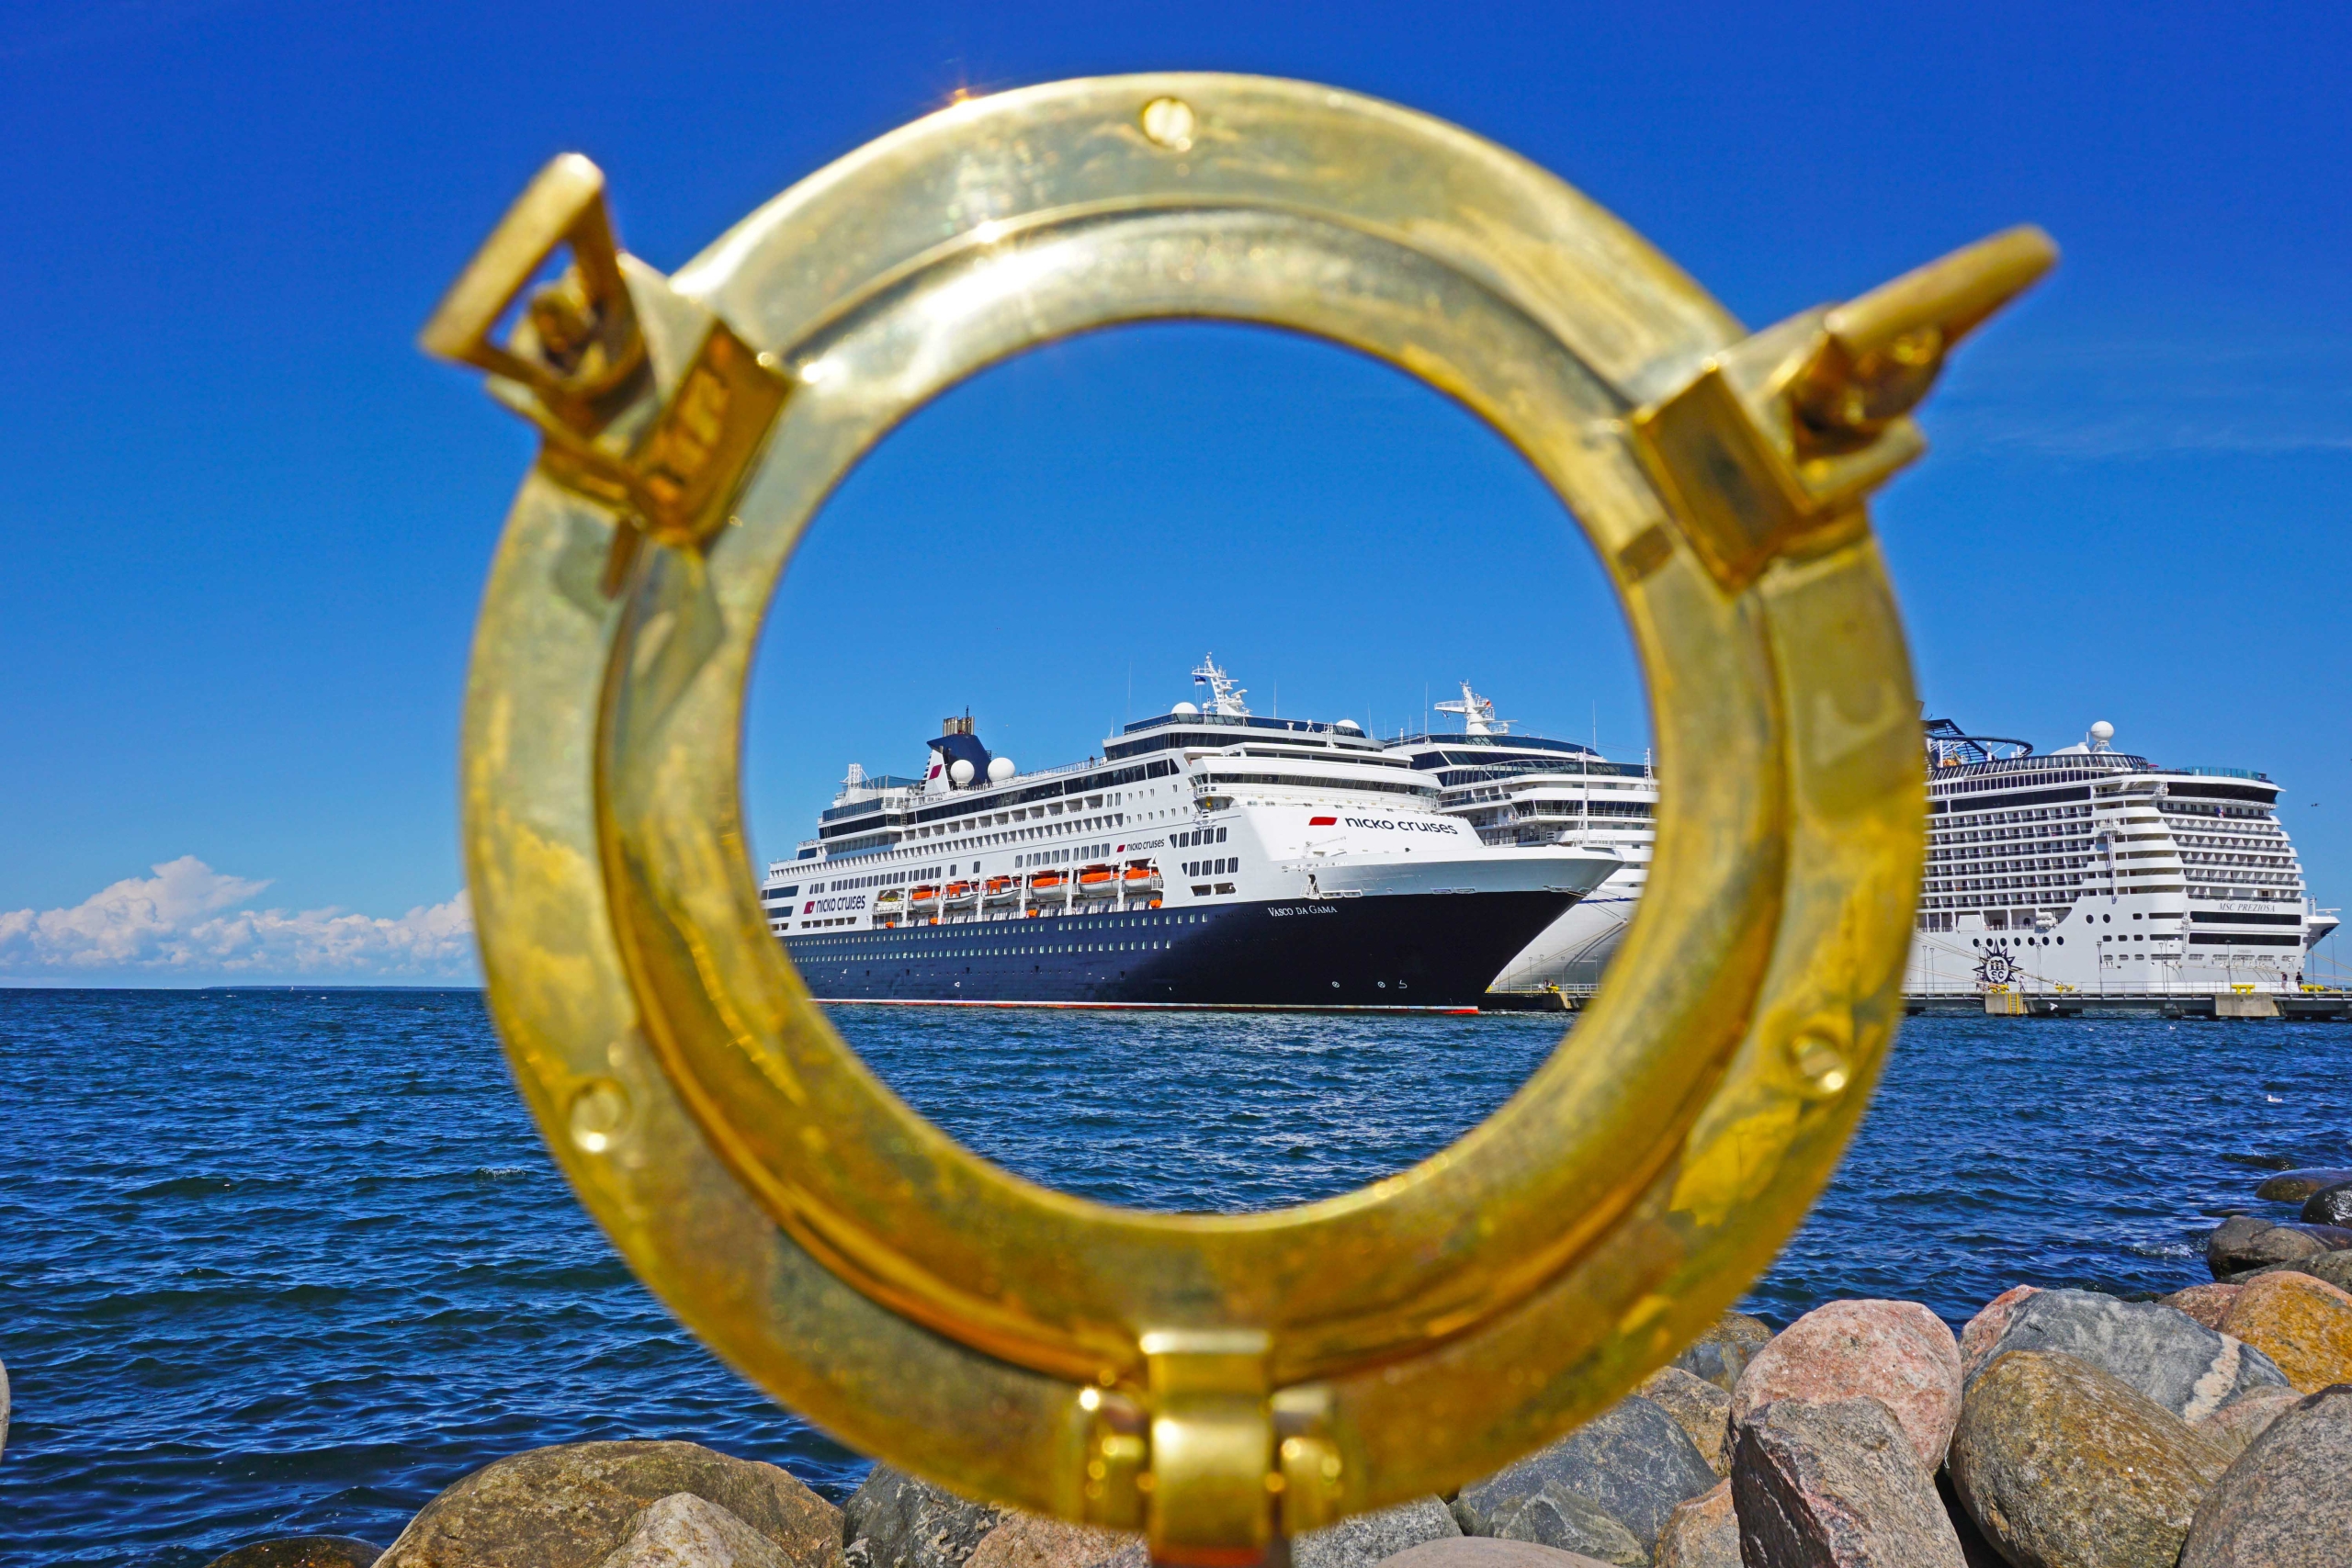 MS Vasco da Gama nicko cruises